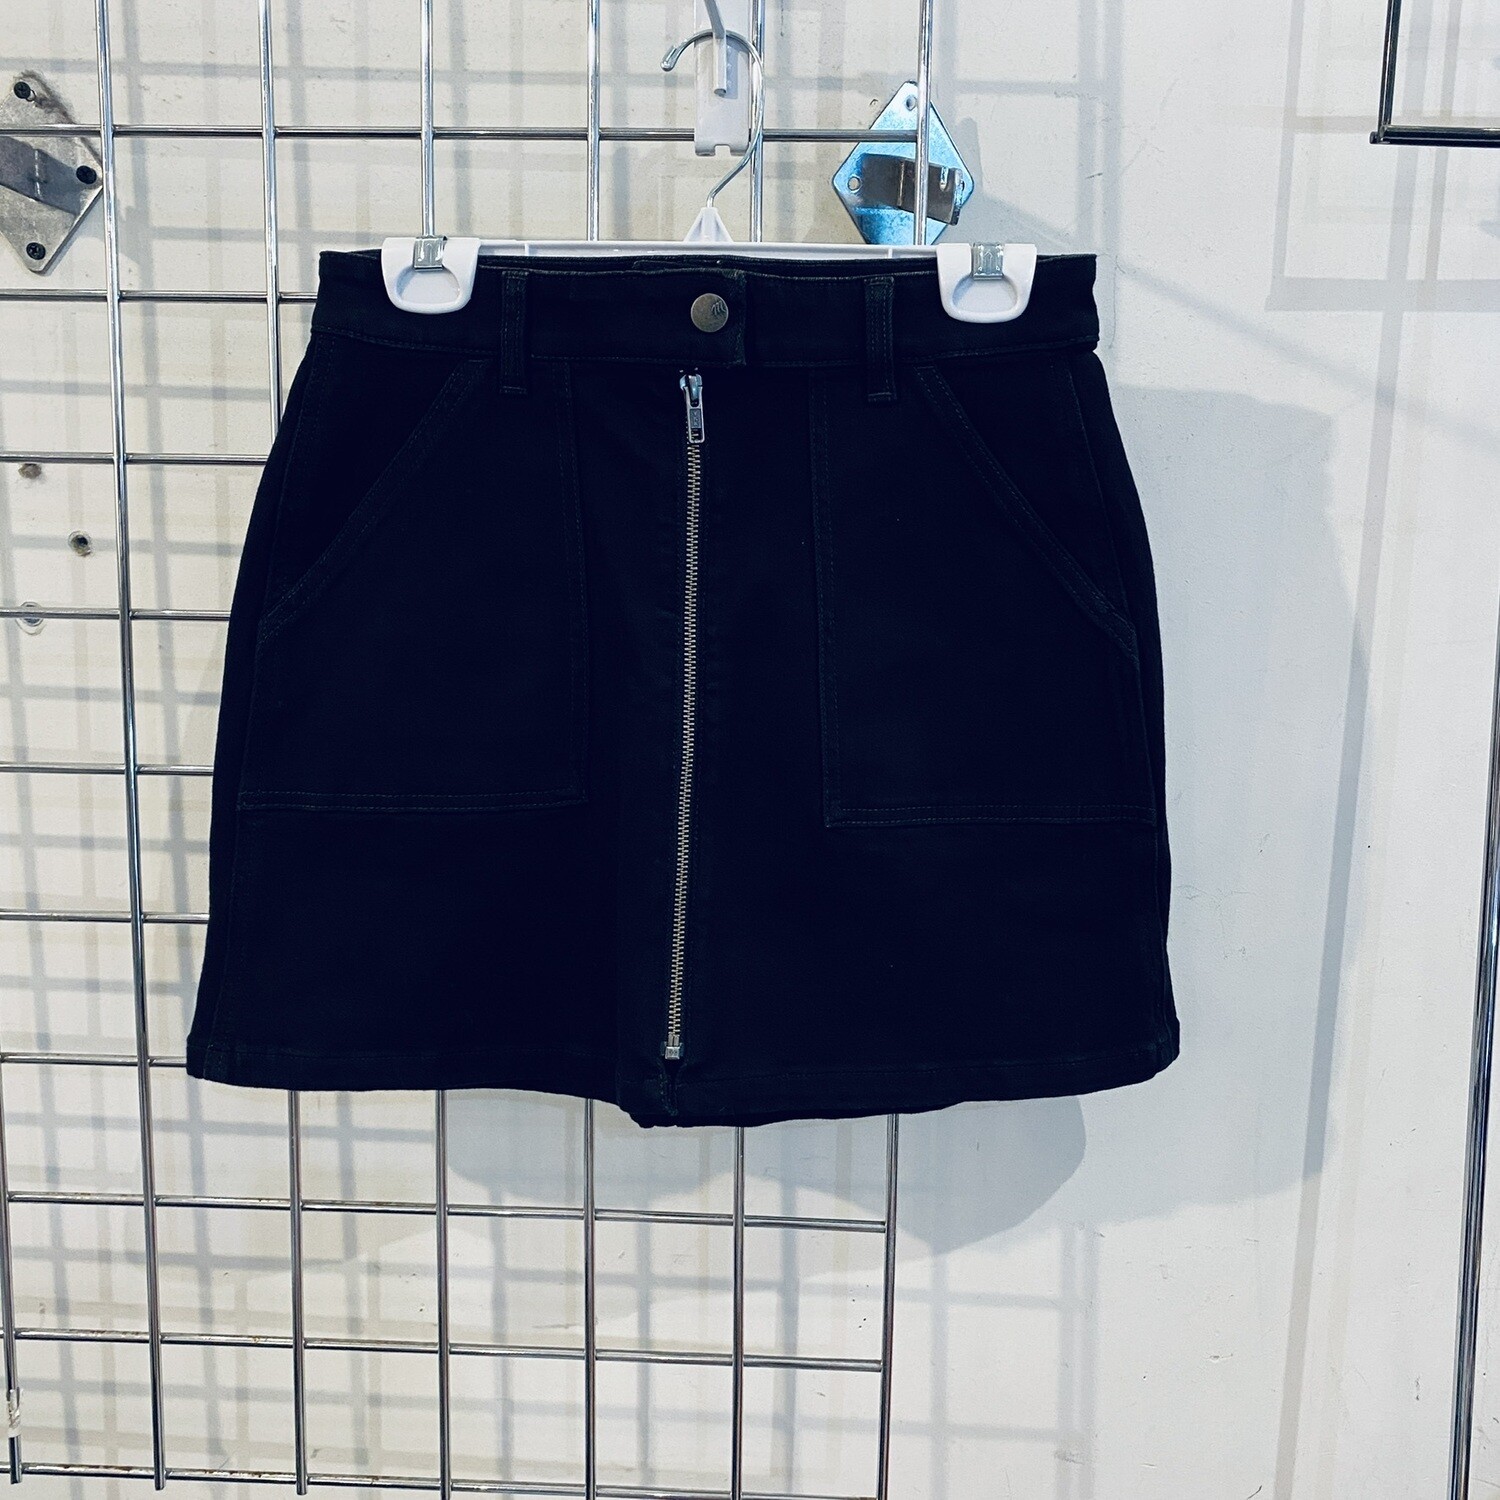 Size 26 Madewell Denim Utility Zip Skirt in Black Frost